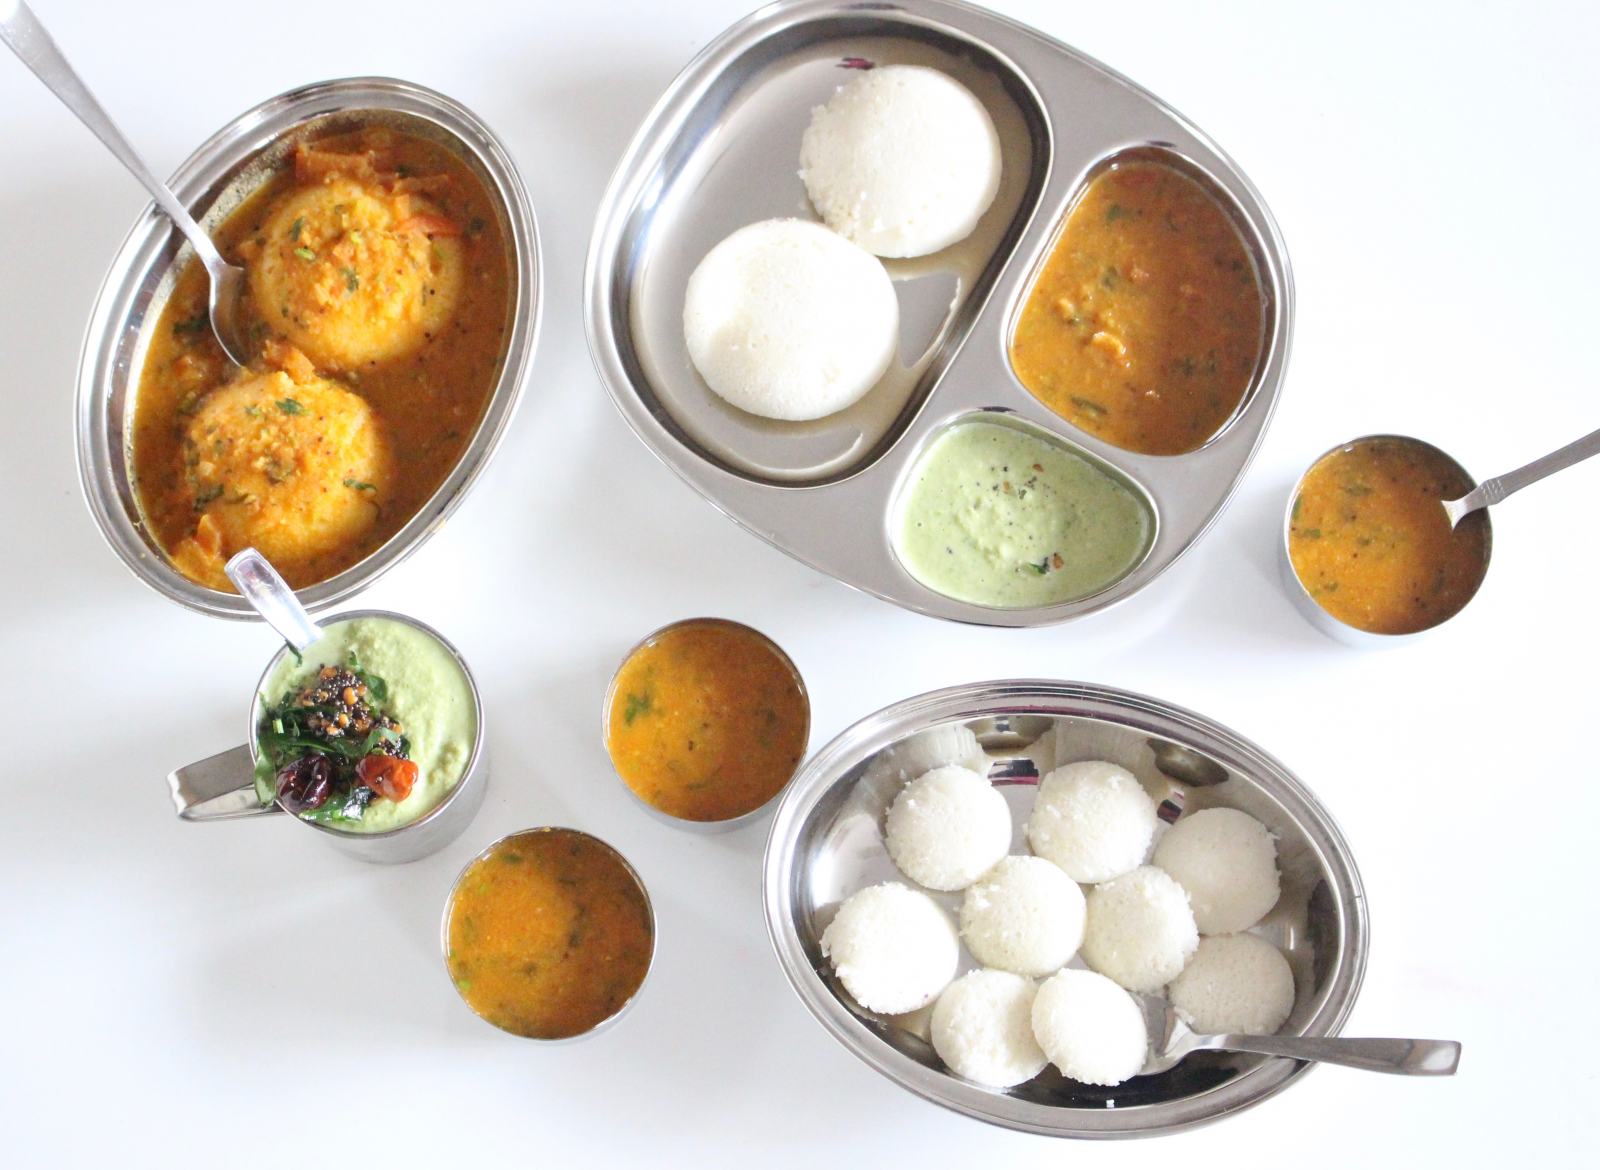 Bangalore Restaurant Style Sambar Recipe - For Idlis